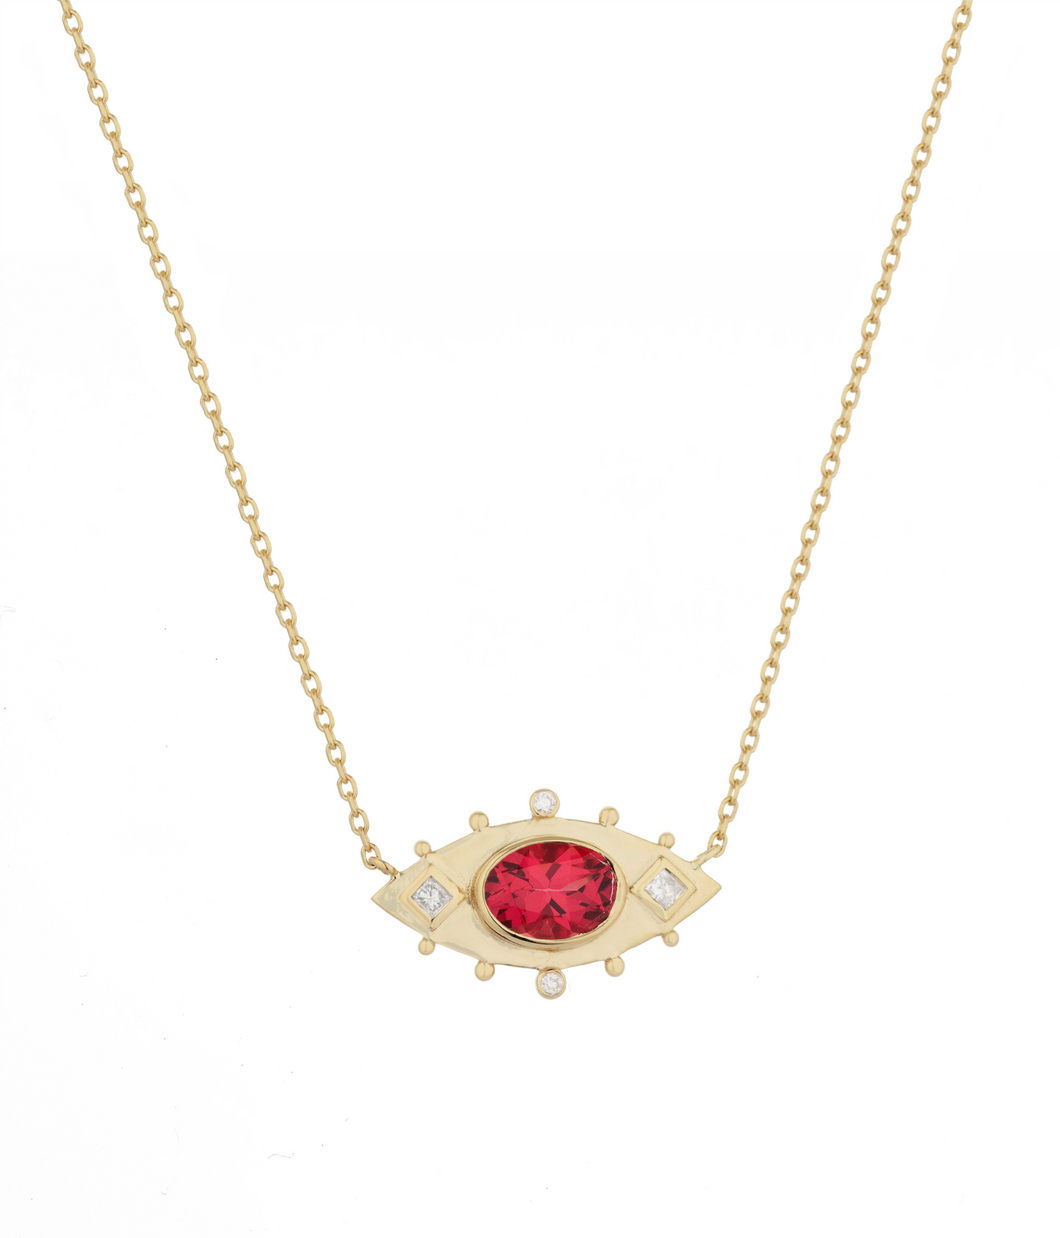 Celine Daoust 14k Gold Spinel Oval Eye & Square Diamond Necklace